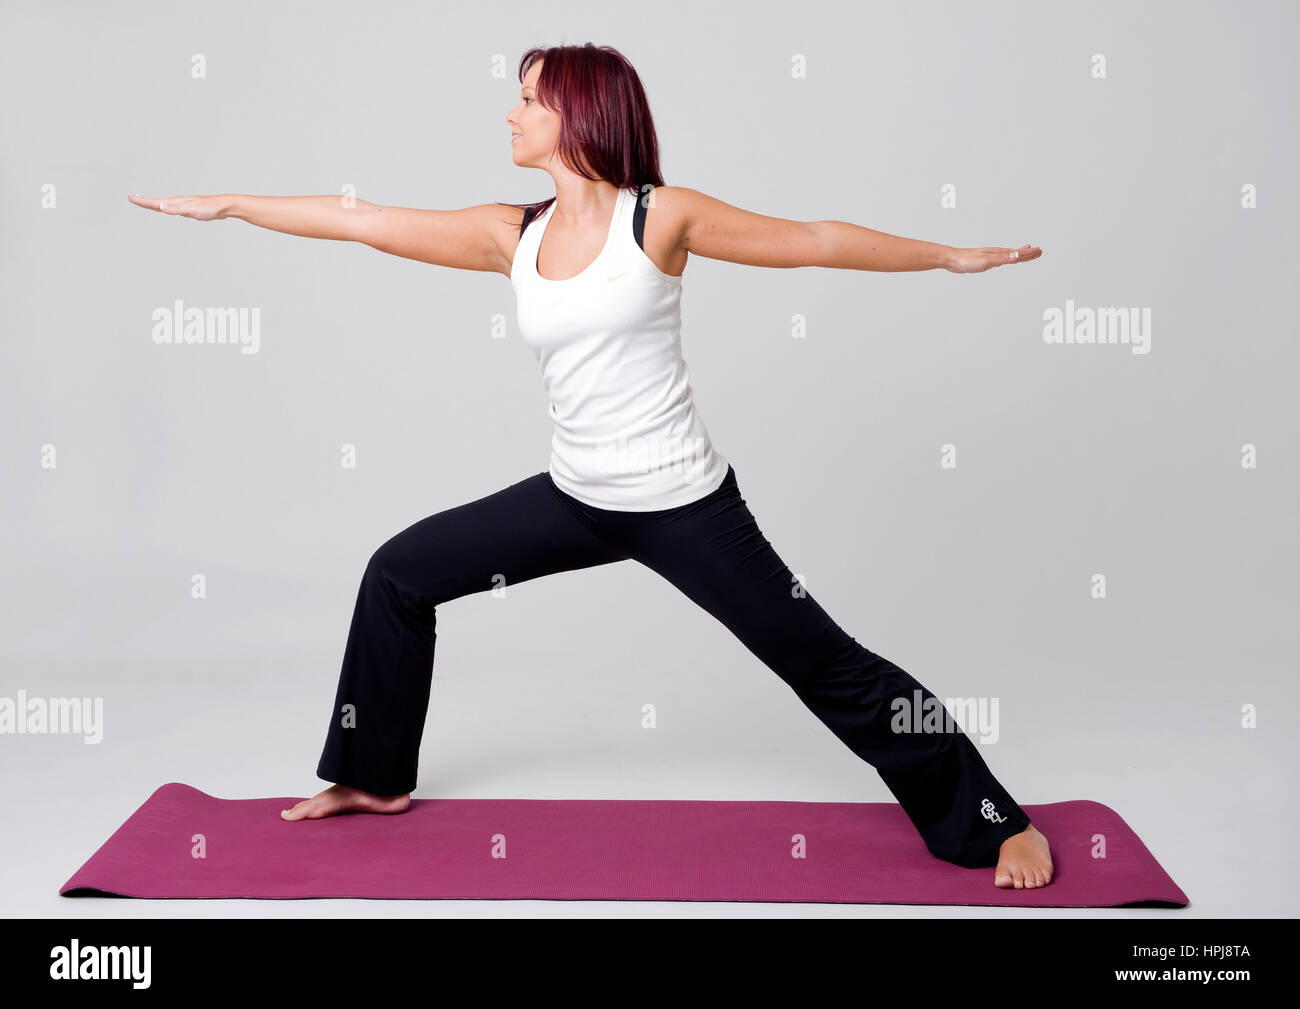 Model released , Jogauebung, Der Krieger - woman does yoga Stock Photo